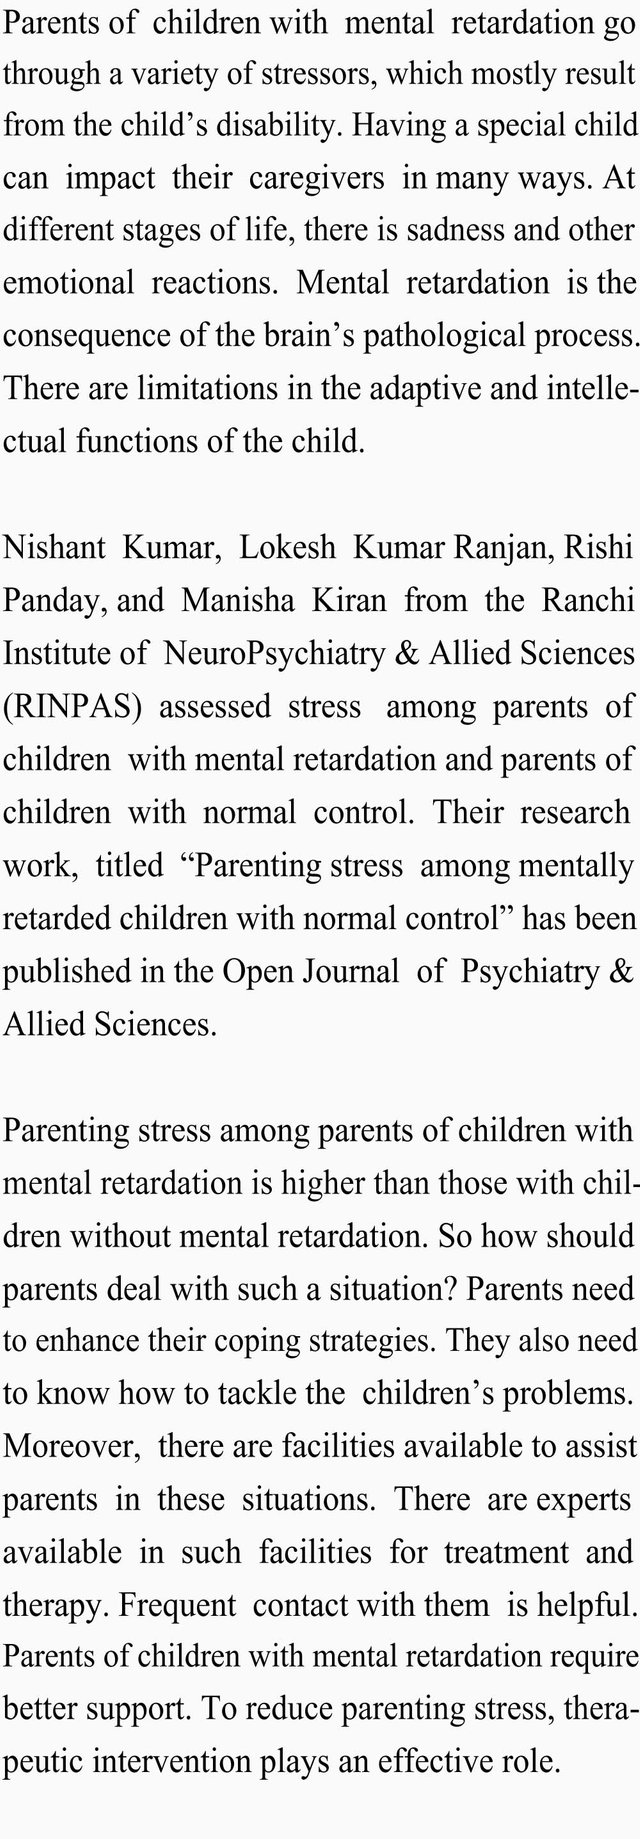 Parenting stress.jpg